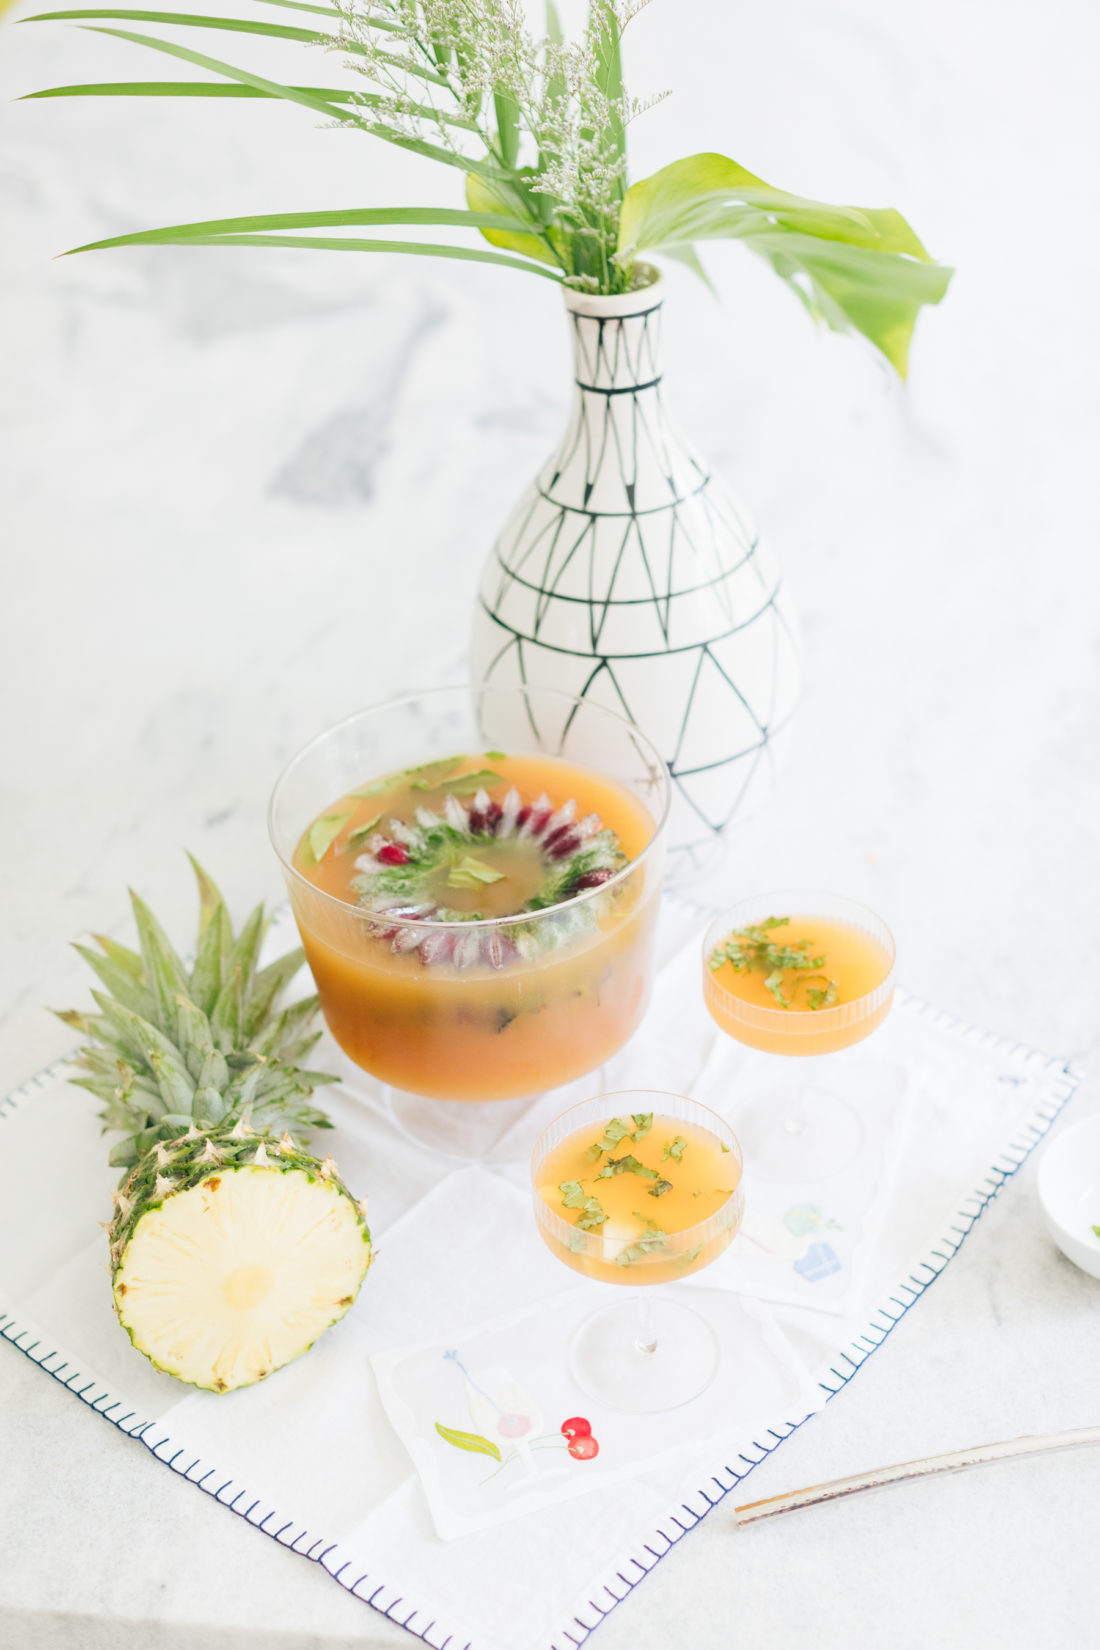 A summer punch cocktail created by Eva Amurri Martino